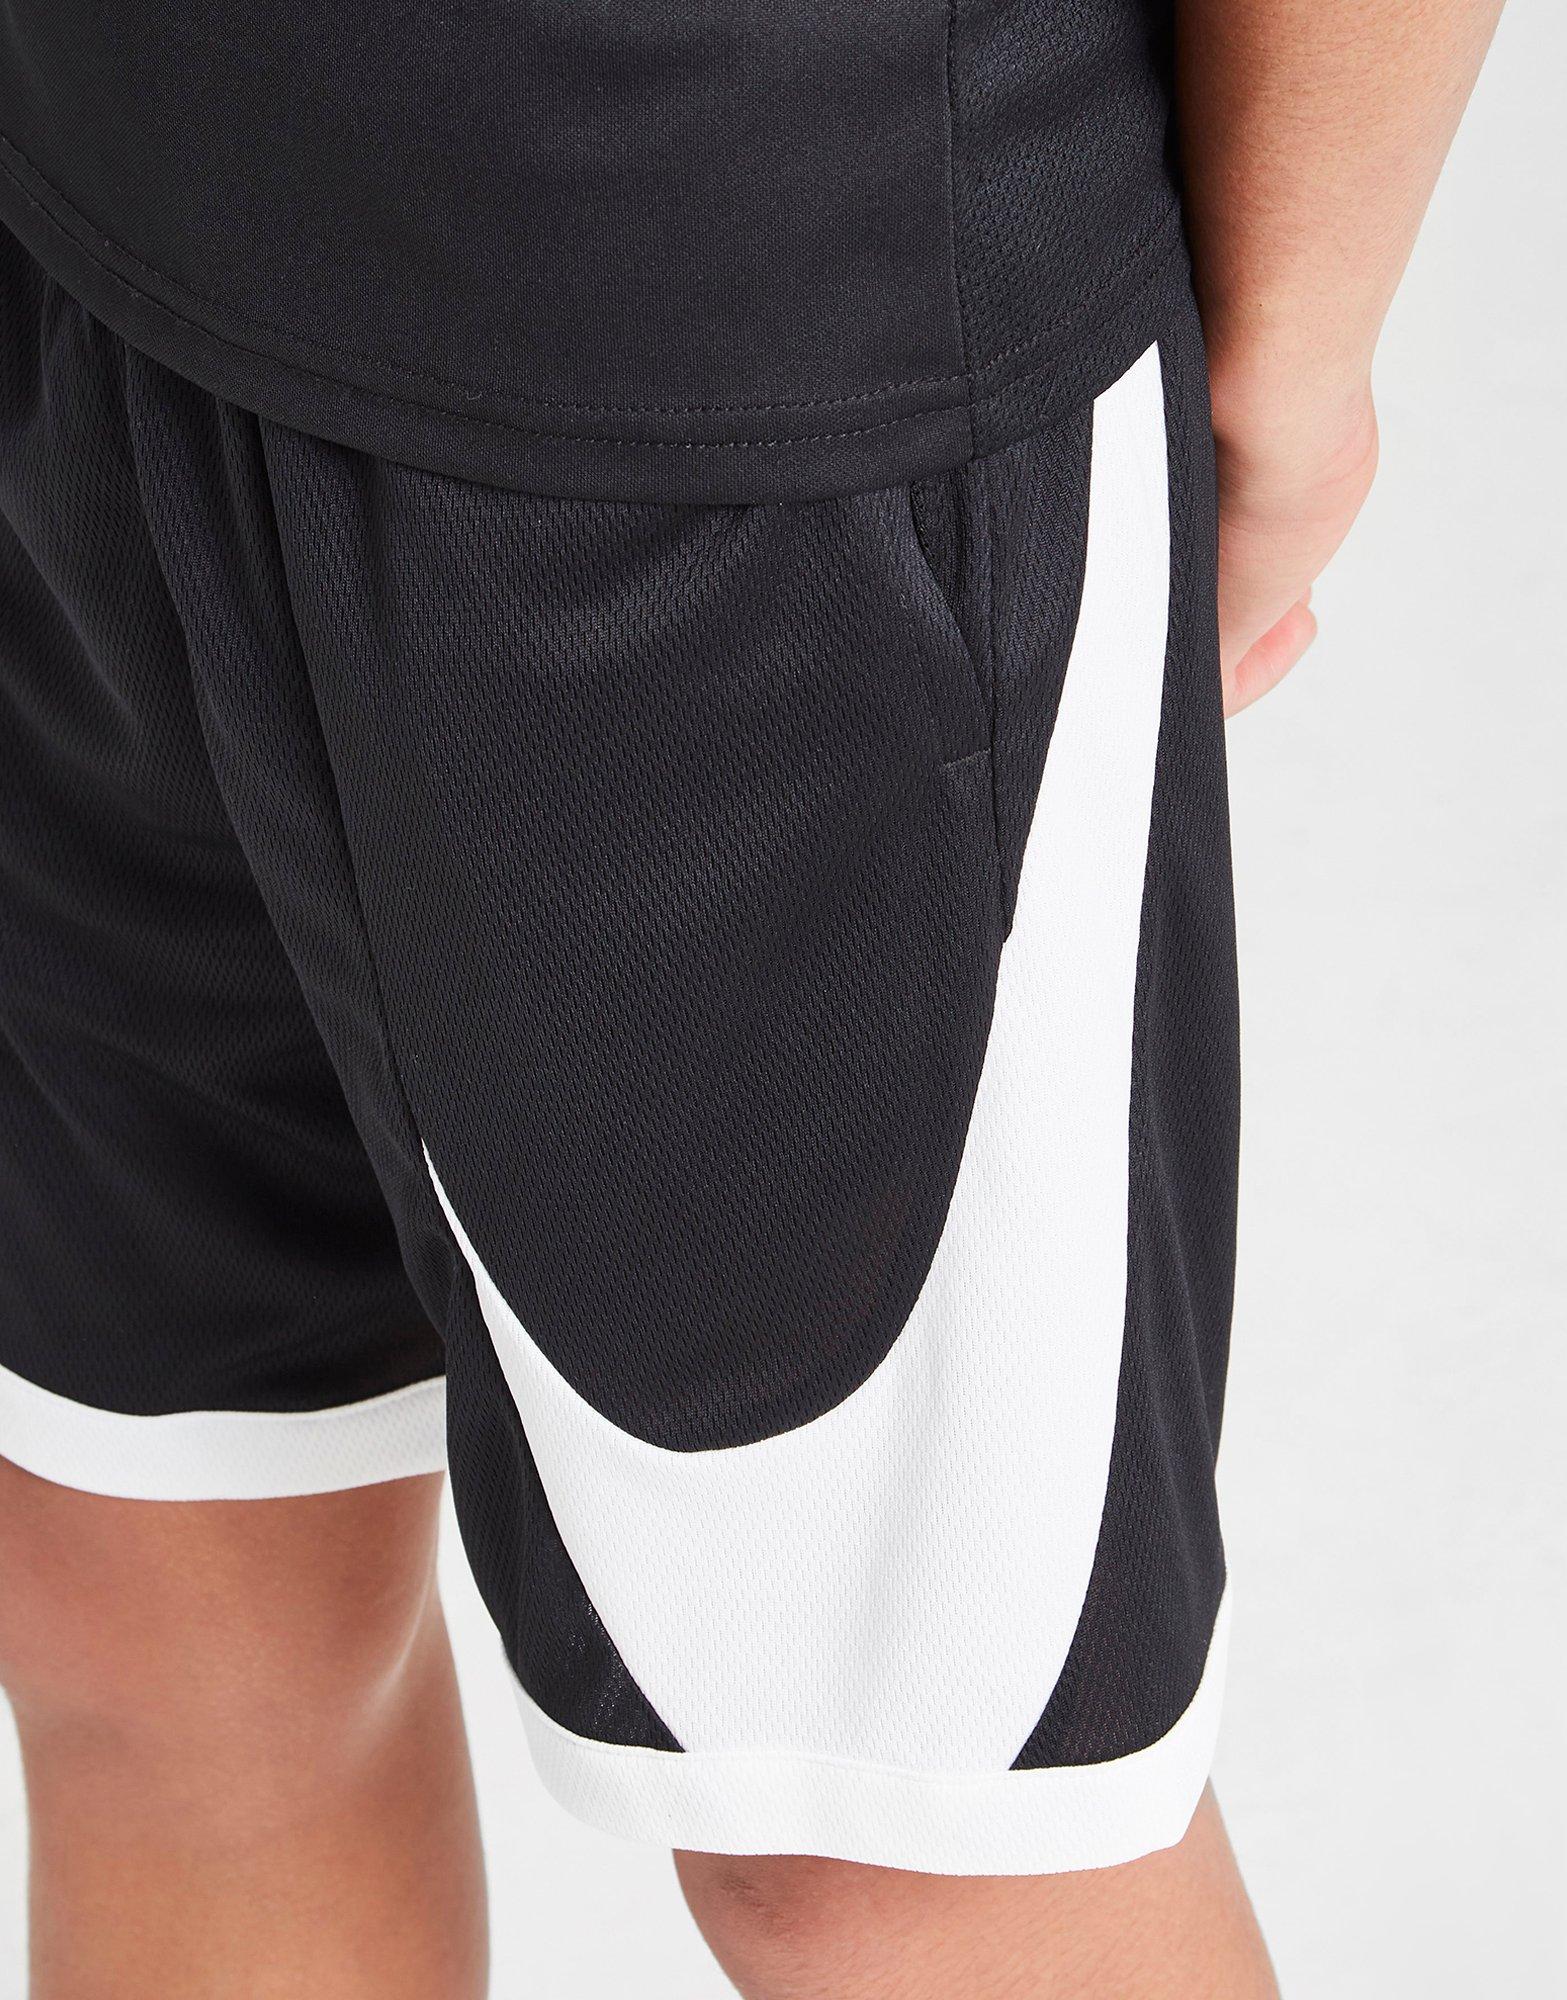 מכנסי כדורסל דריי פיט קצרים | ג'וניורס